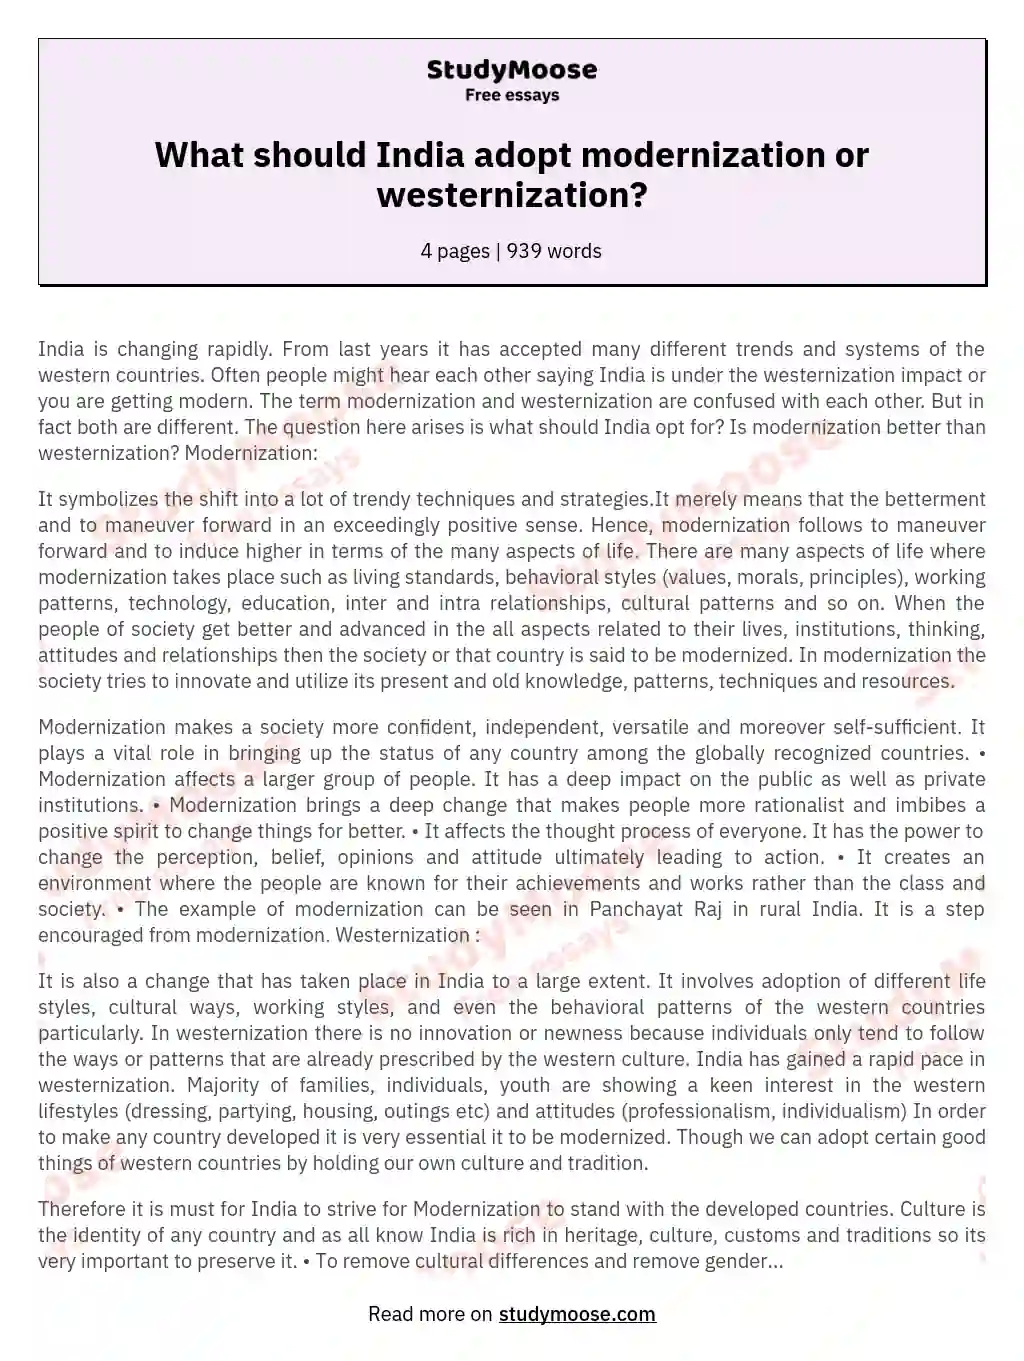 What should India adopt modernization or westernization? essay